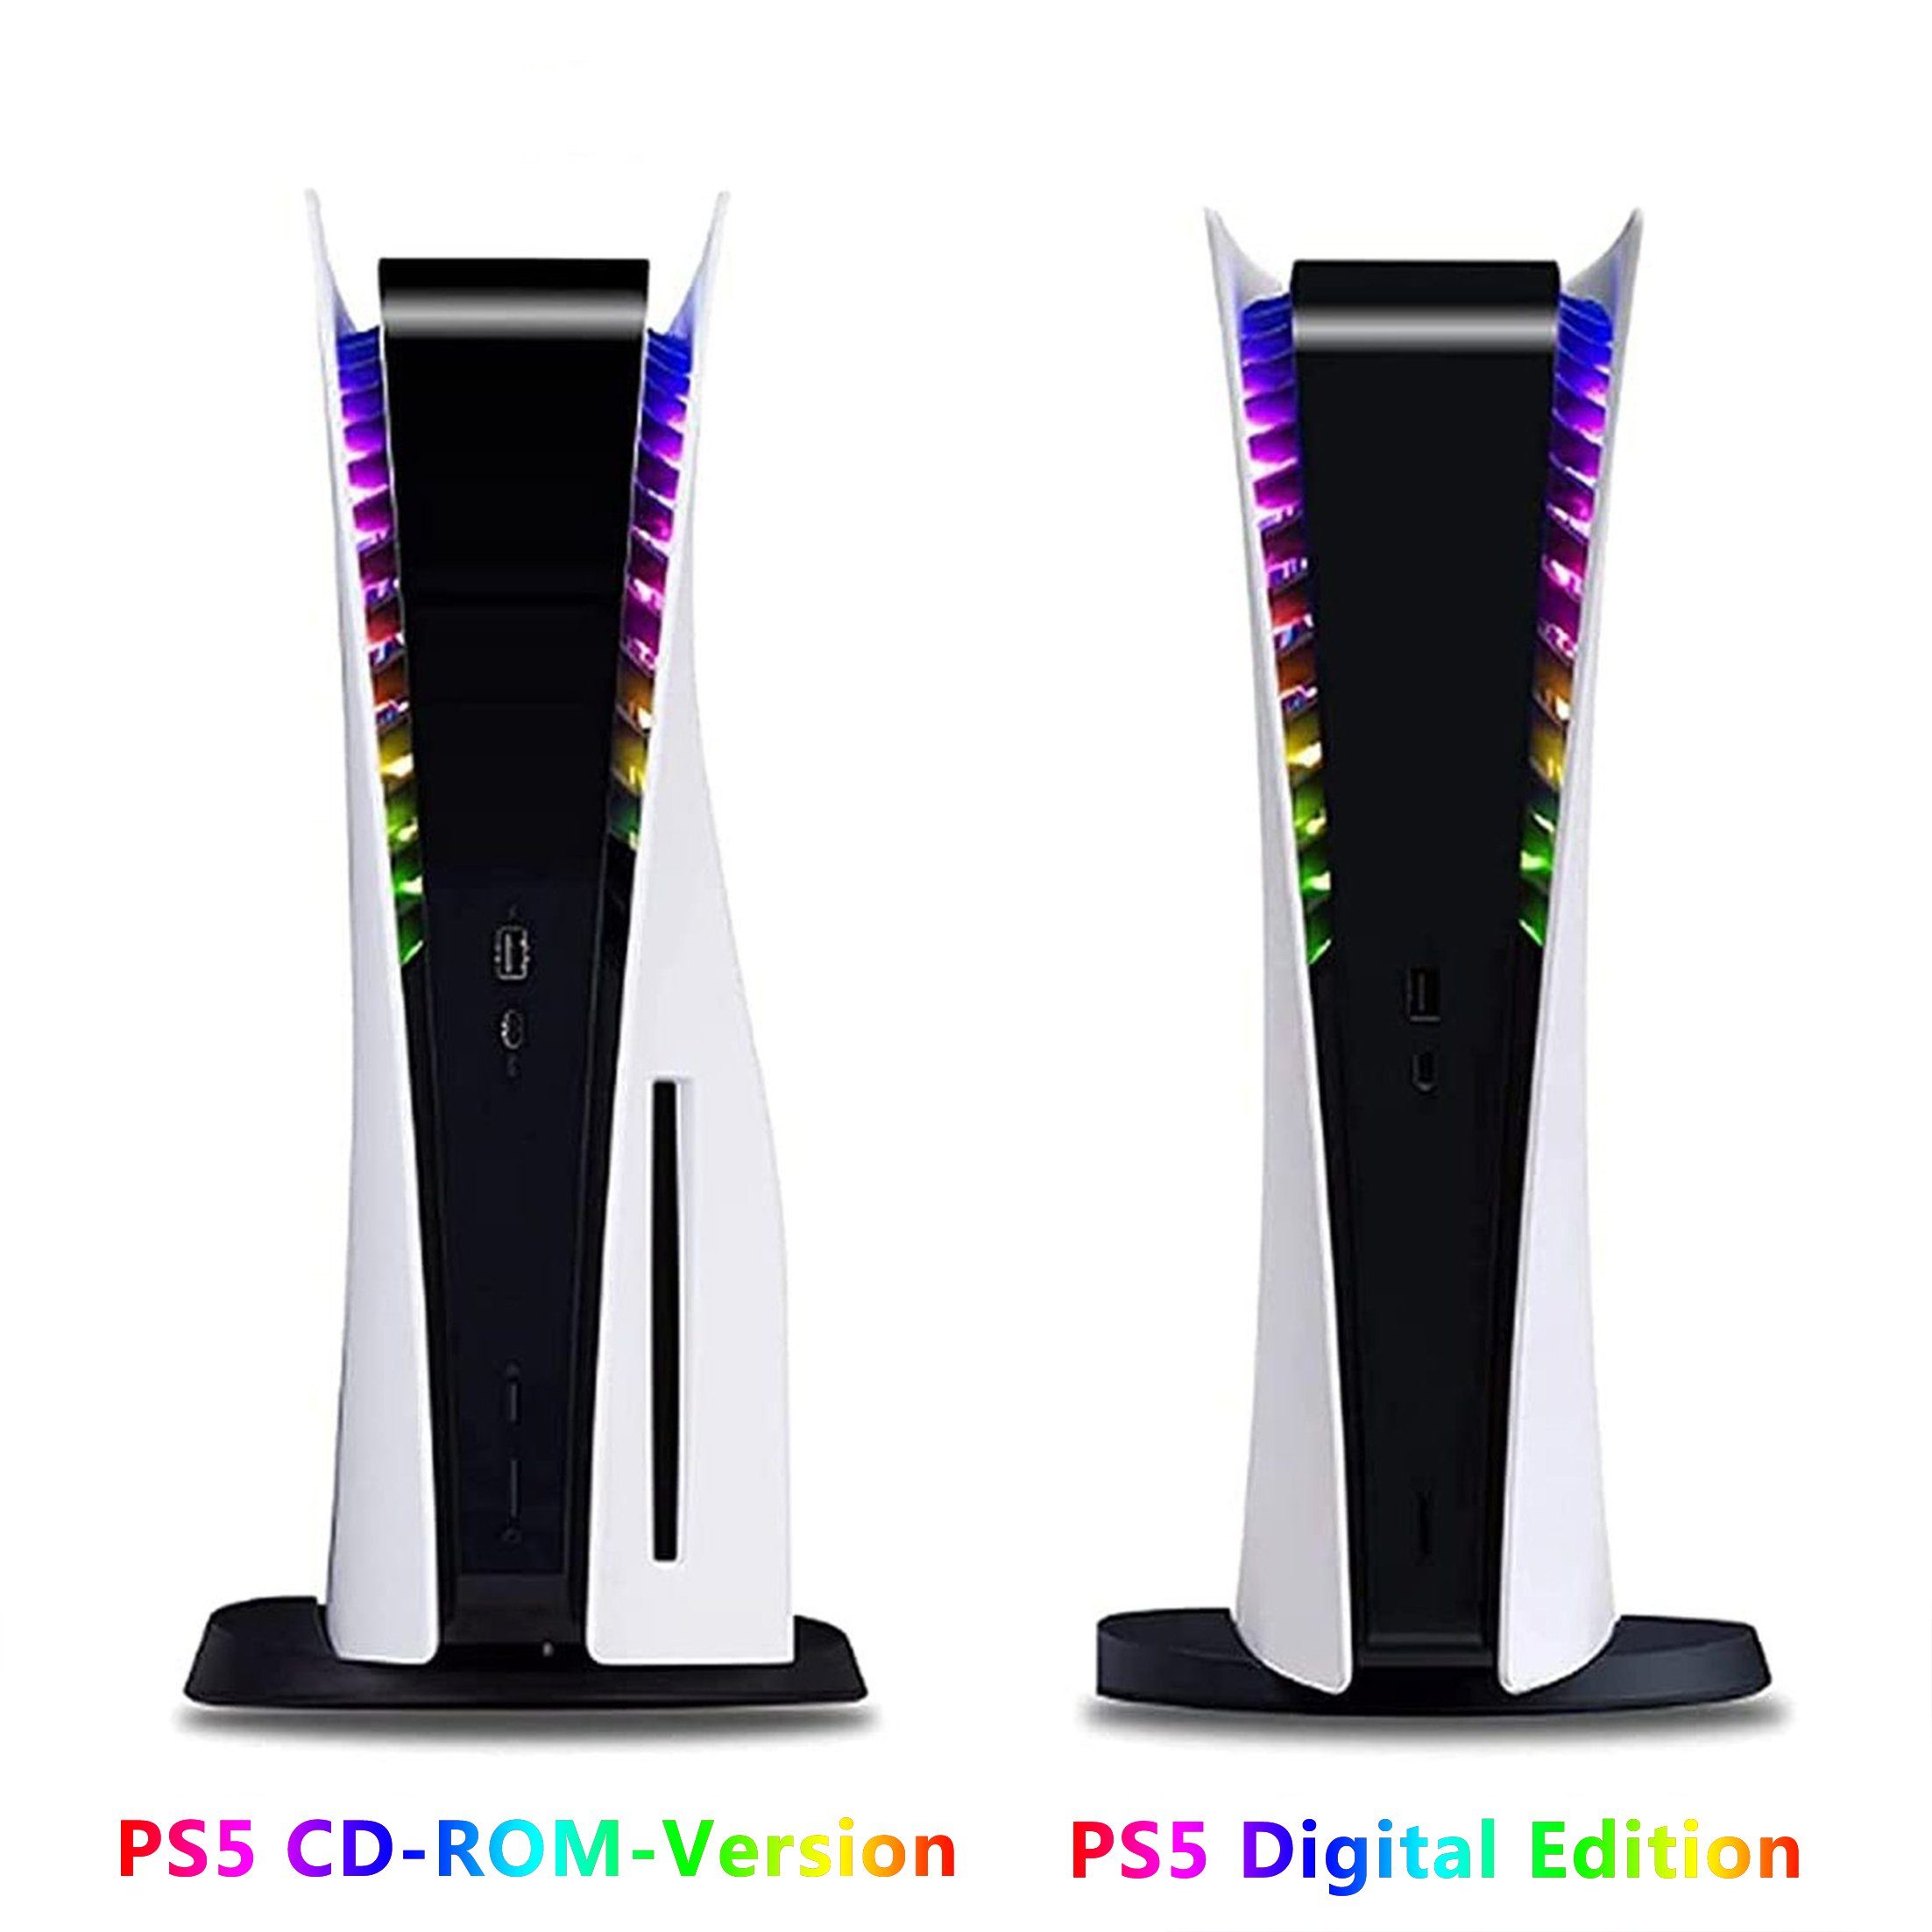 Tadow PS5-Konsole LED-Lichtleiste, 8 PlayStation USB-Taste/Fernbedienung/App, Farben 5-Controller